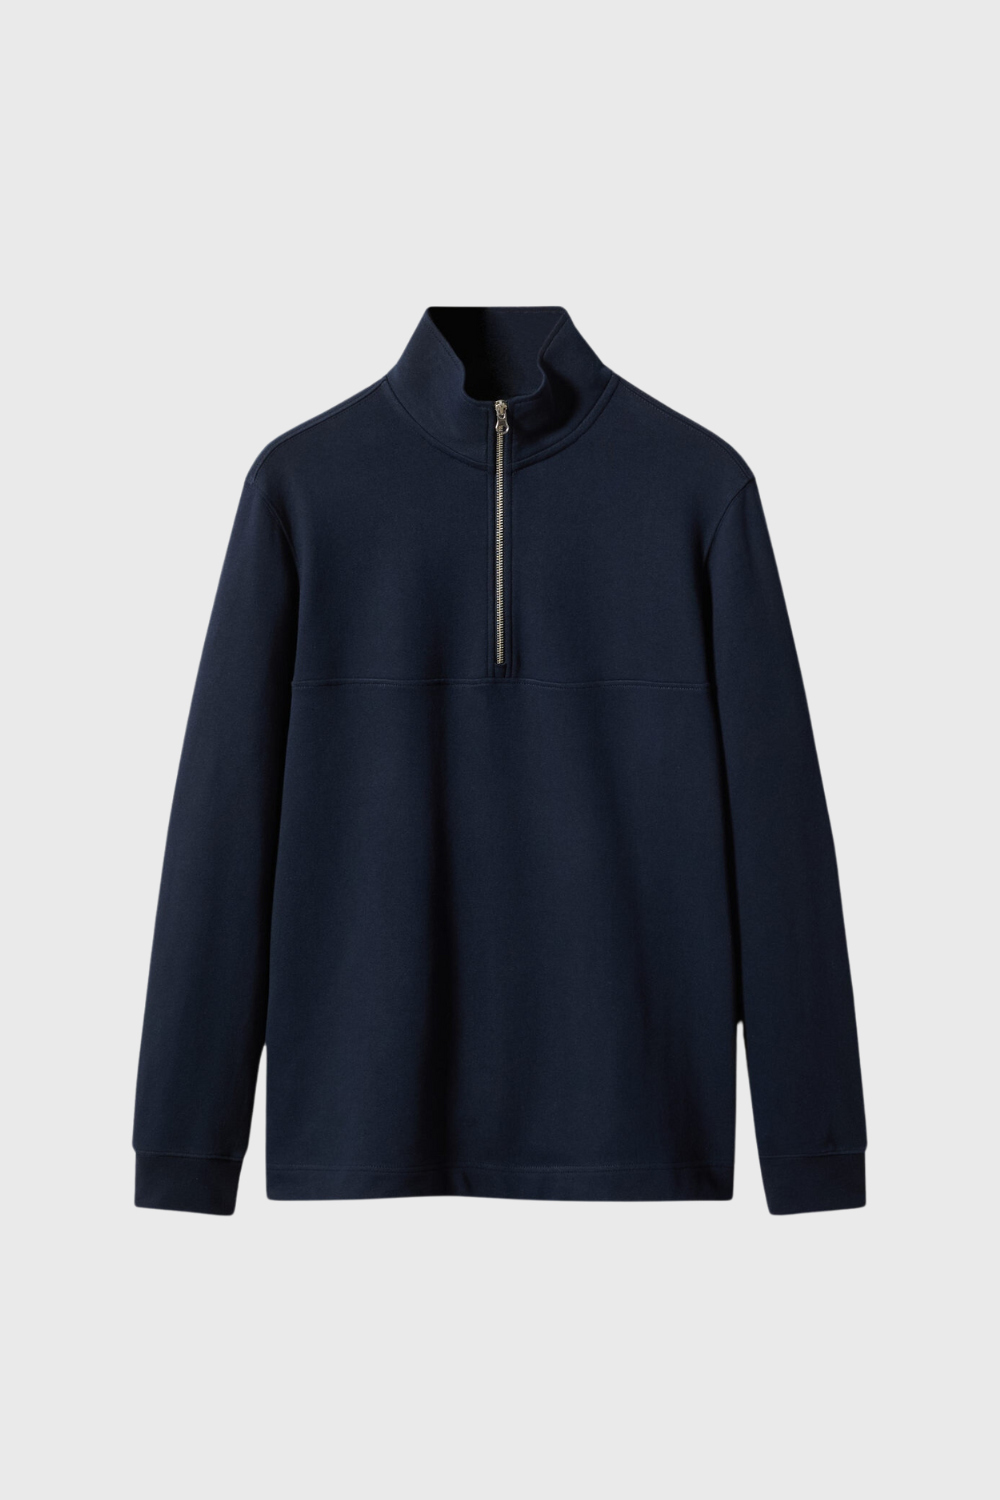 cotton sweatshirt with zipper neck